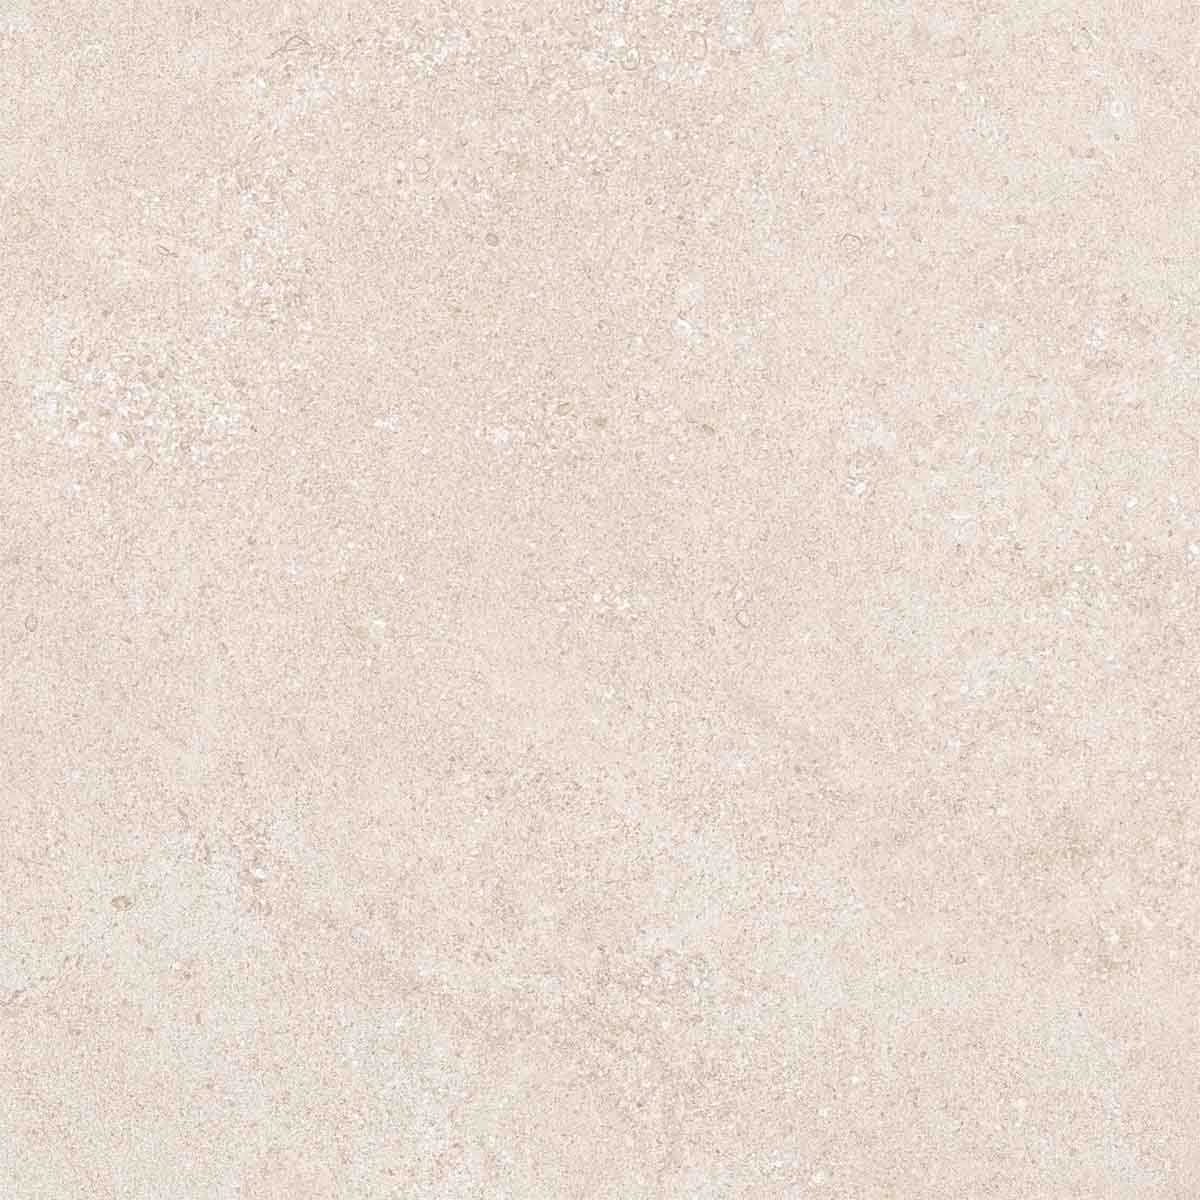 cluny beige stone effect porcelain floor tile 90x90cm matt